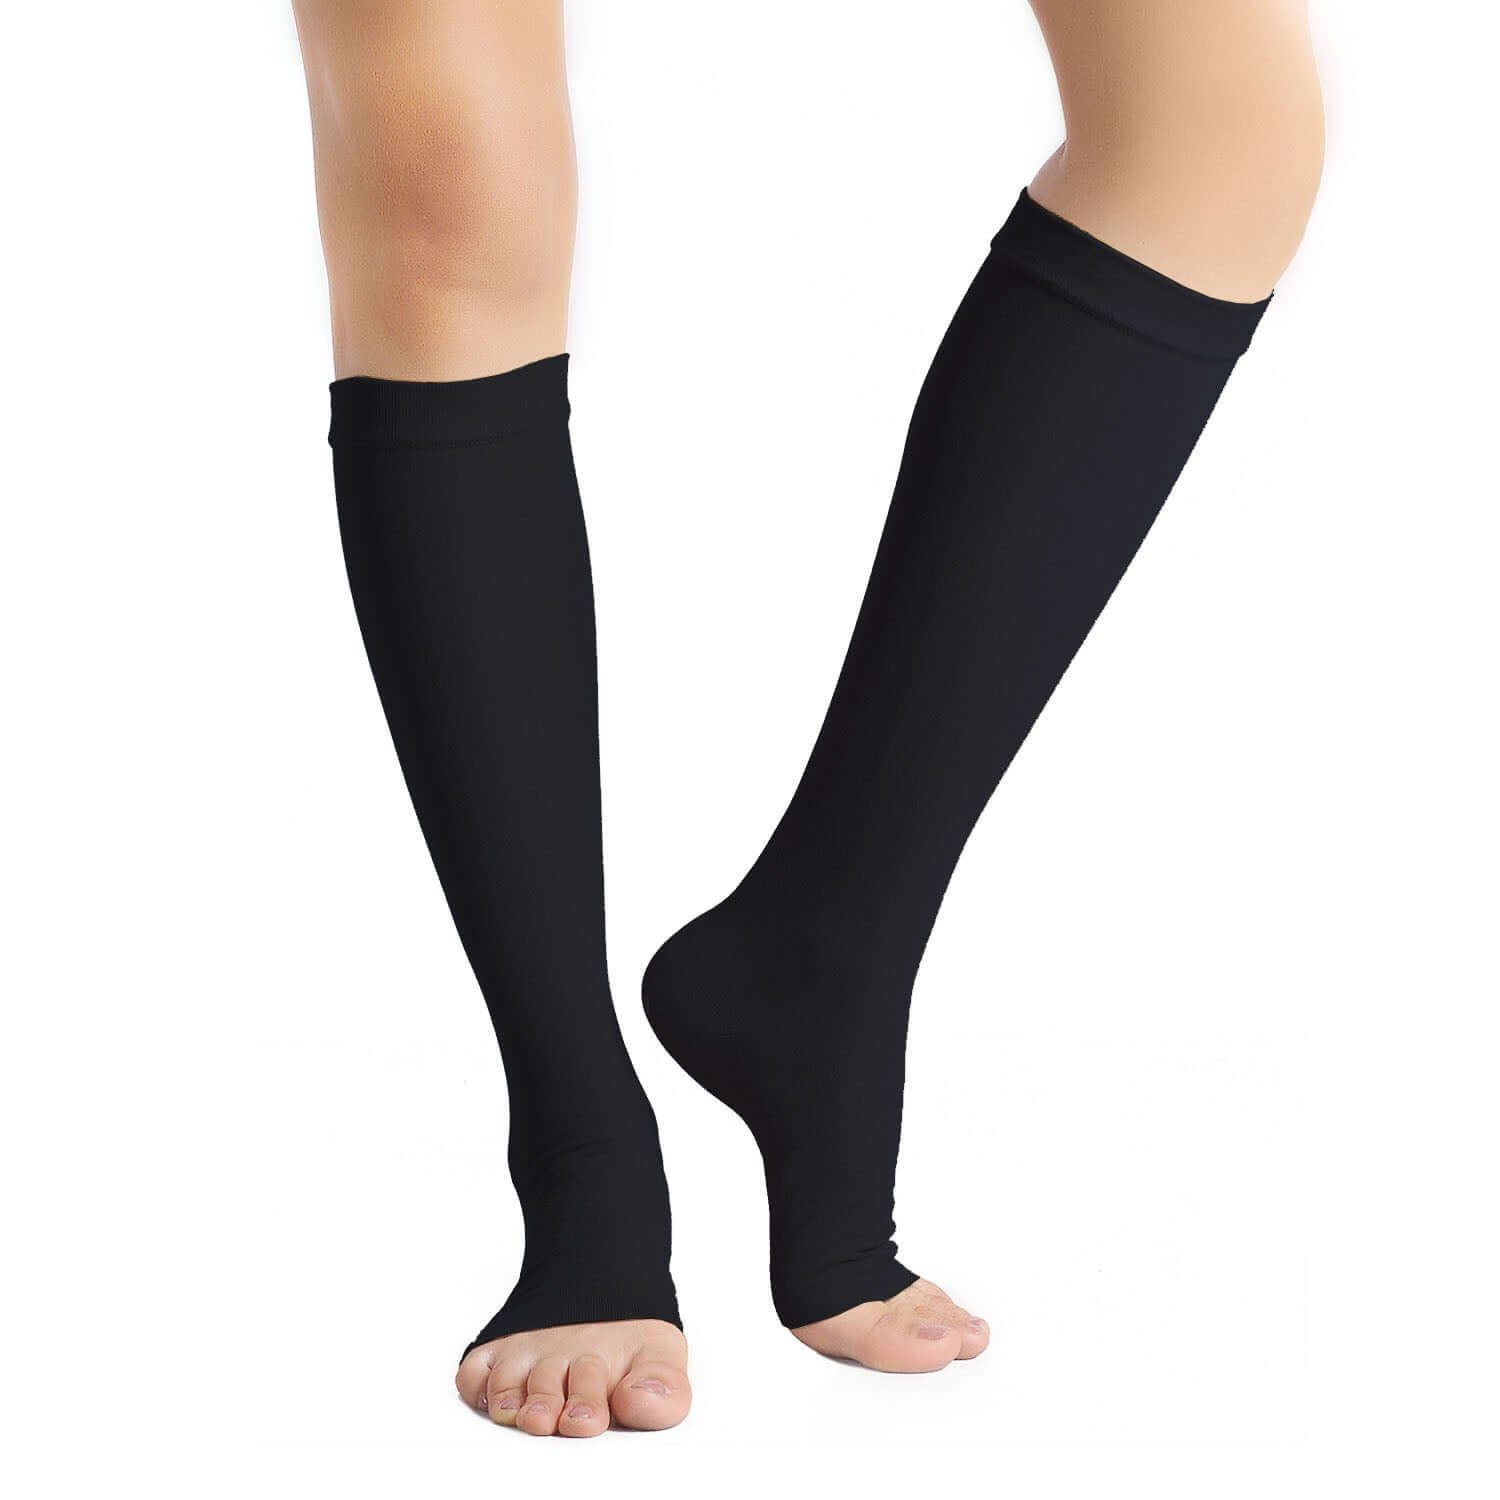 Open Toe Medical Compression Socks Graduated 20-30 mmHg Knee High 1 Pack